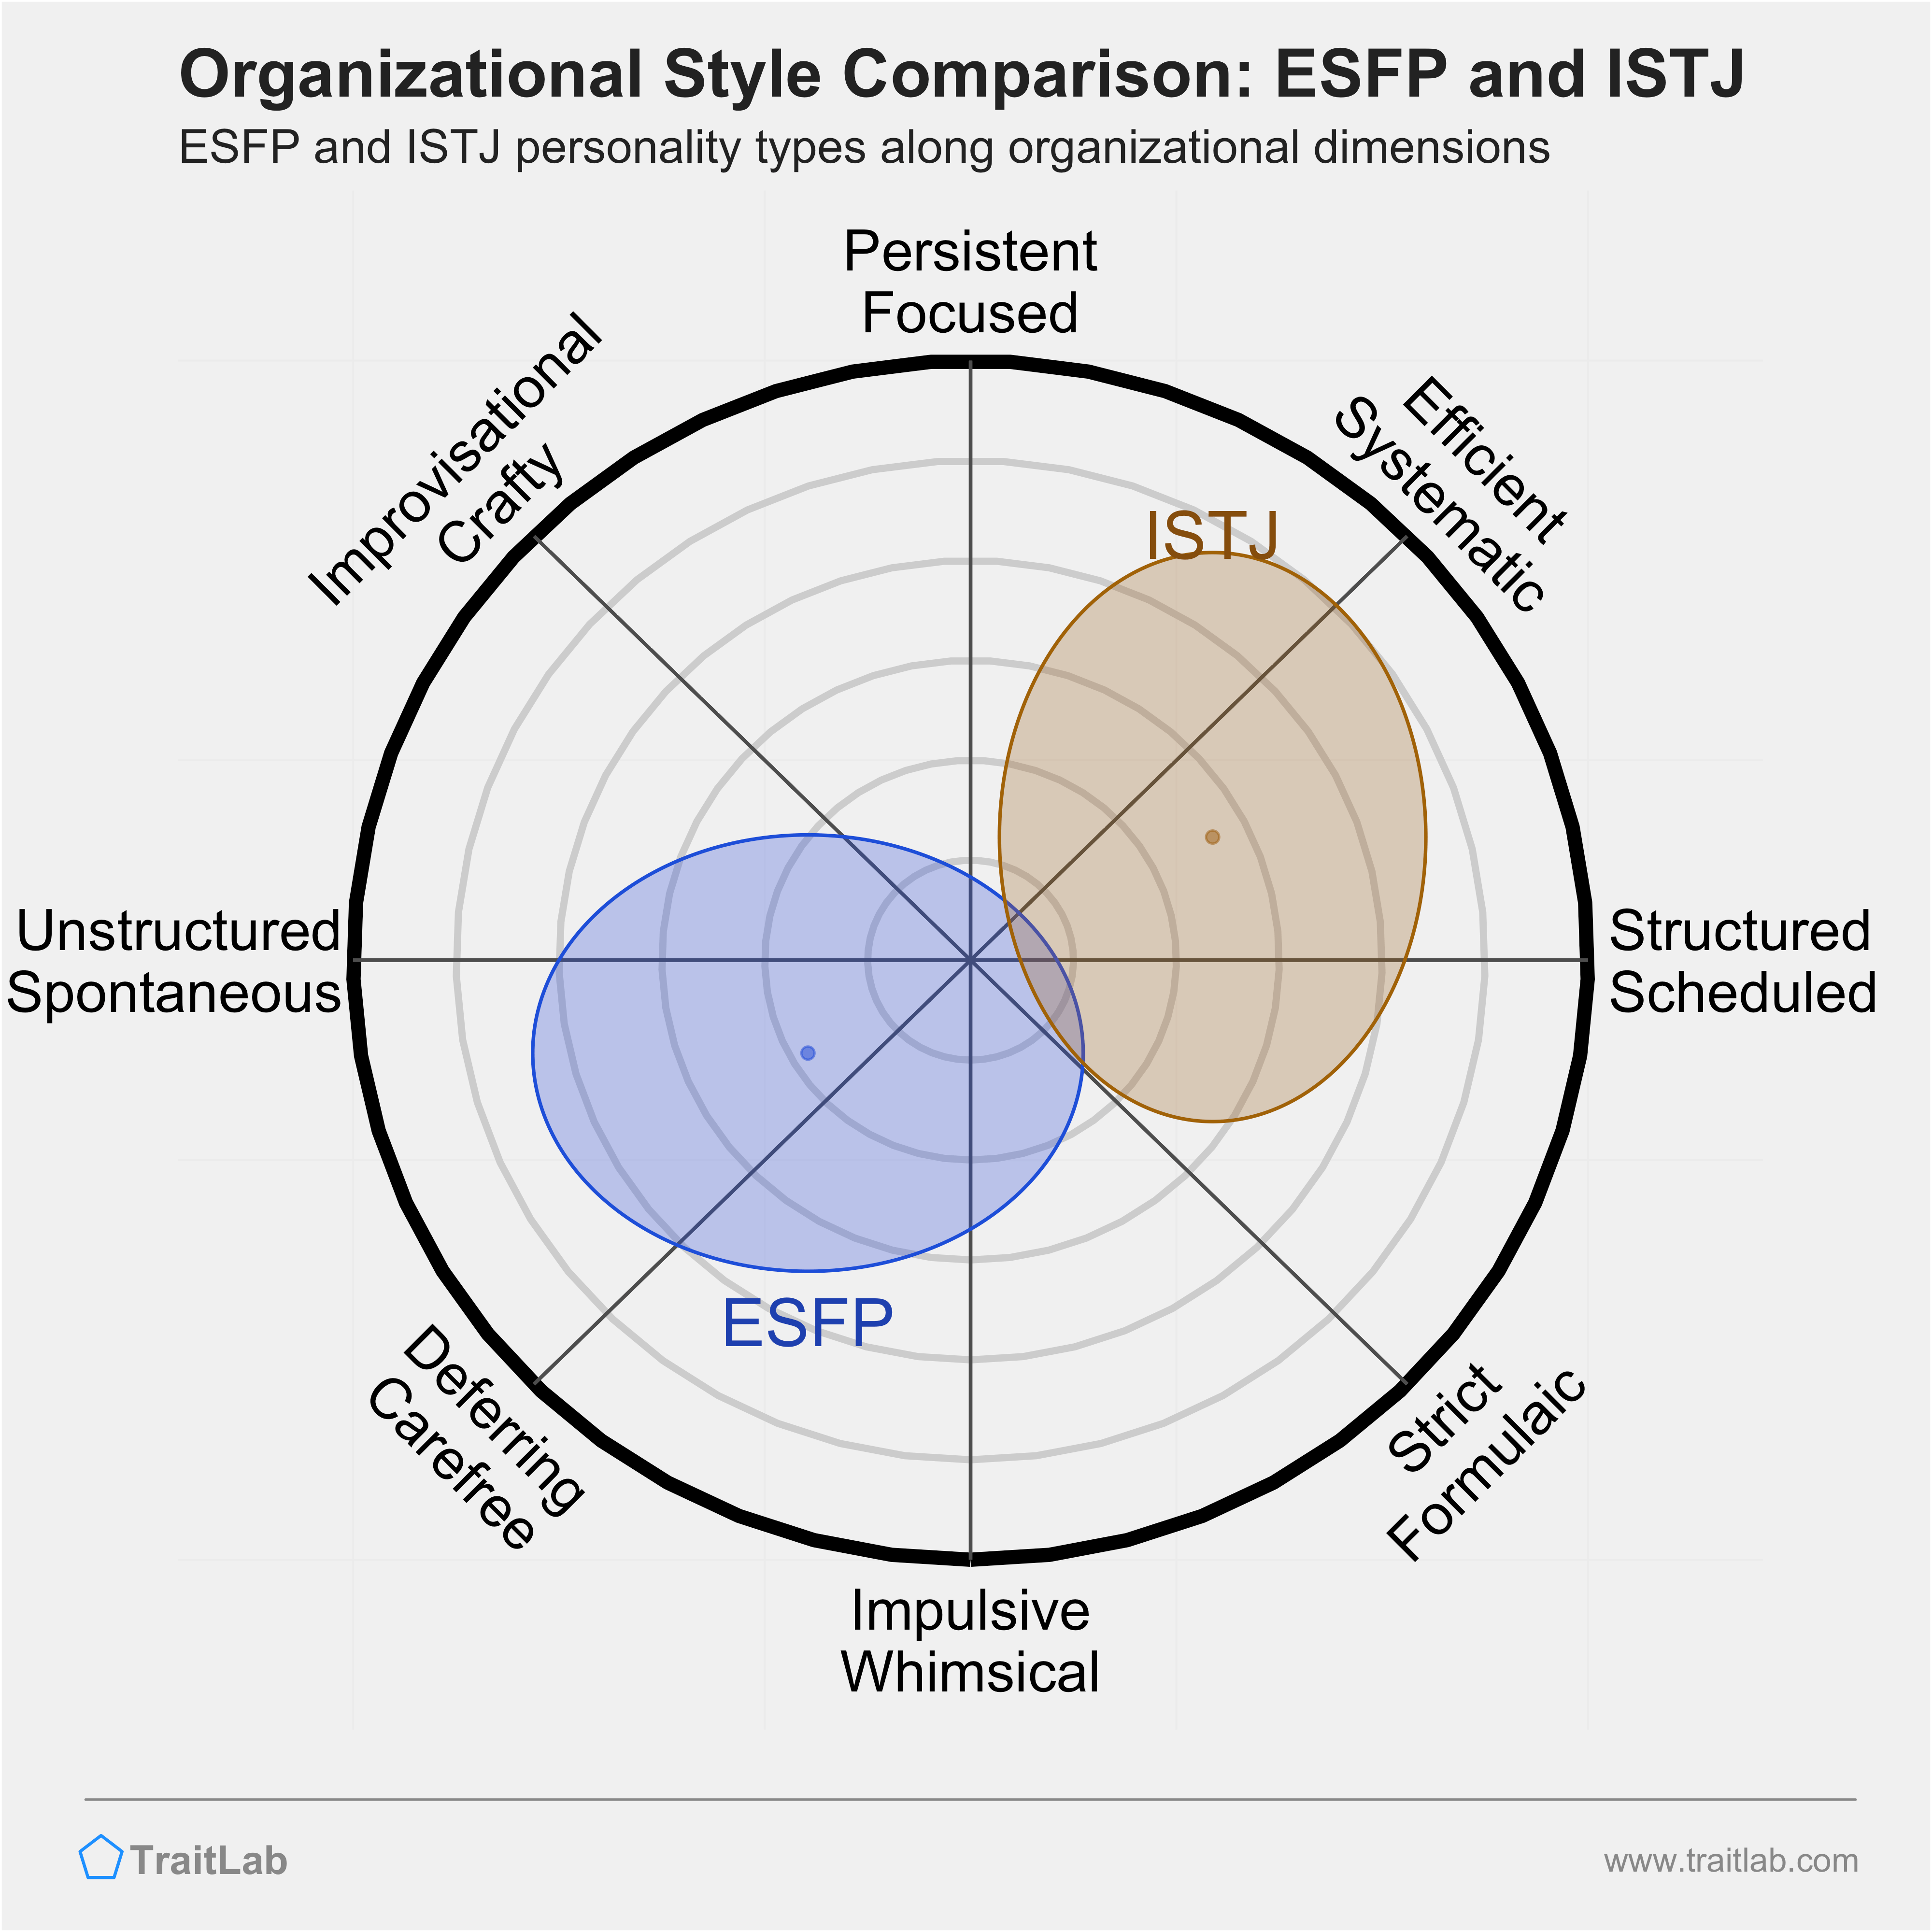 ESFP and ISTJ comparison across organizational dimensions